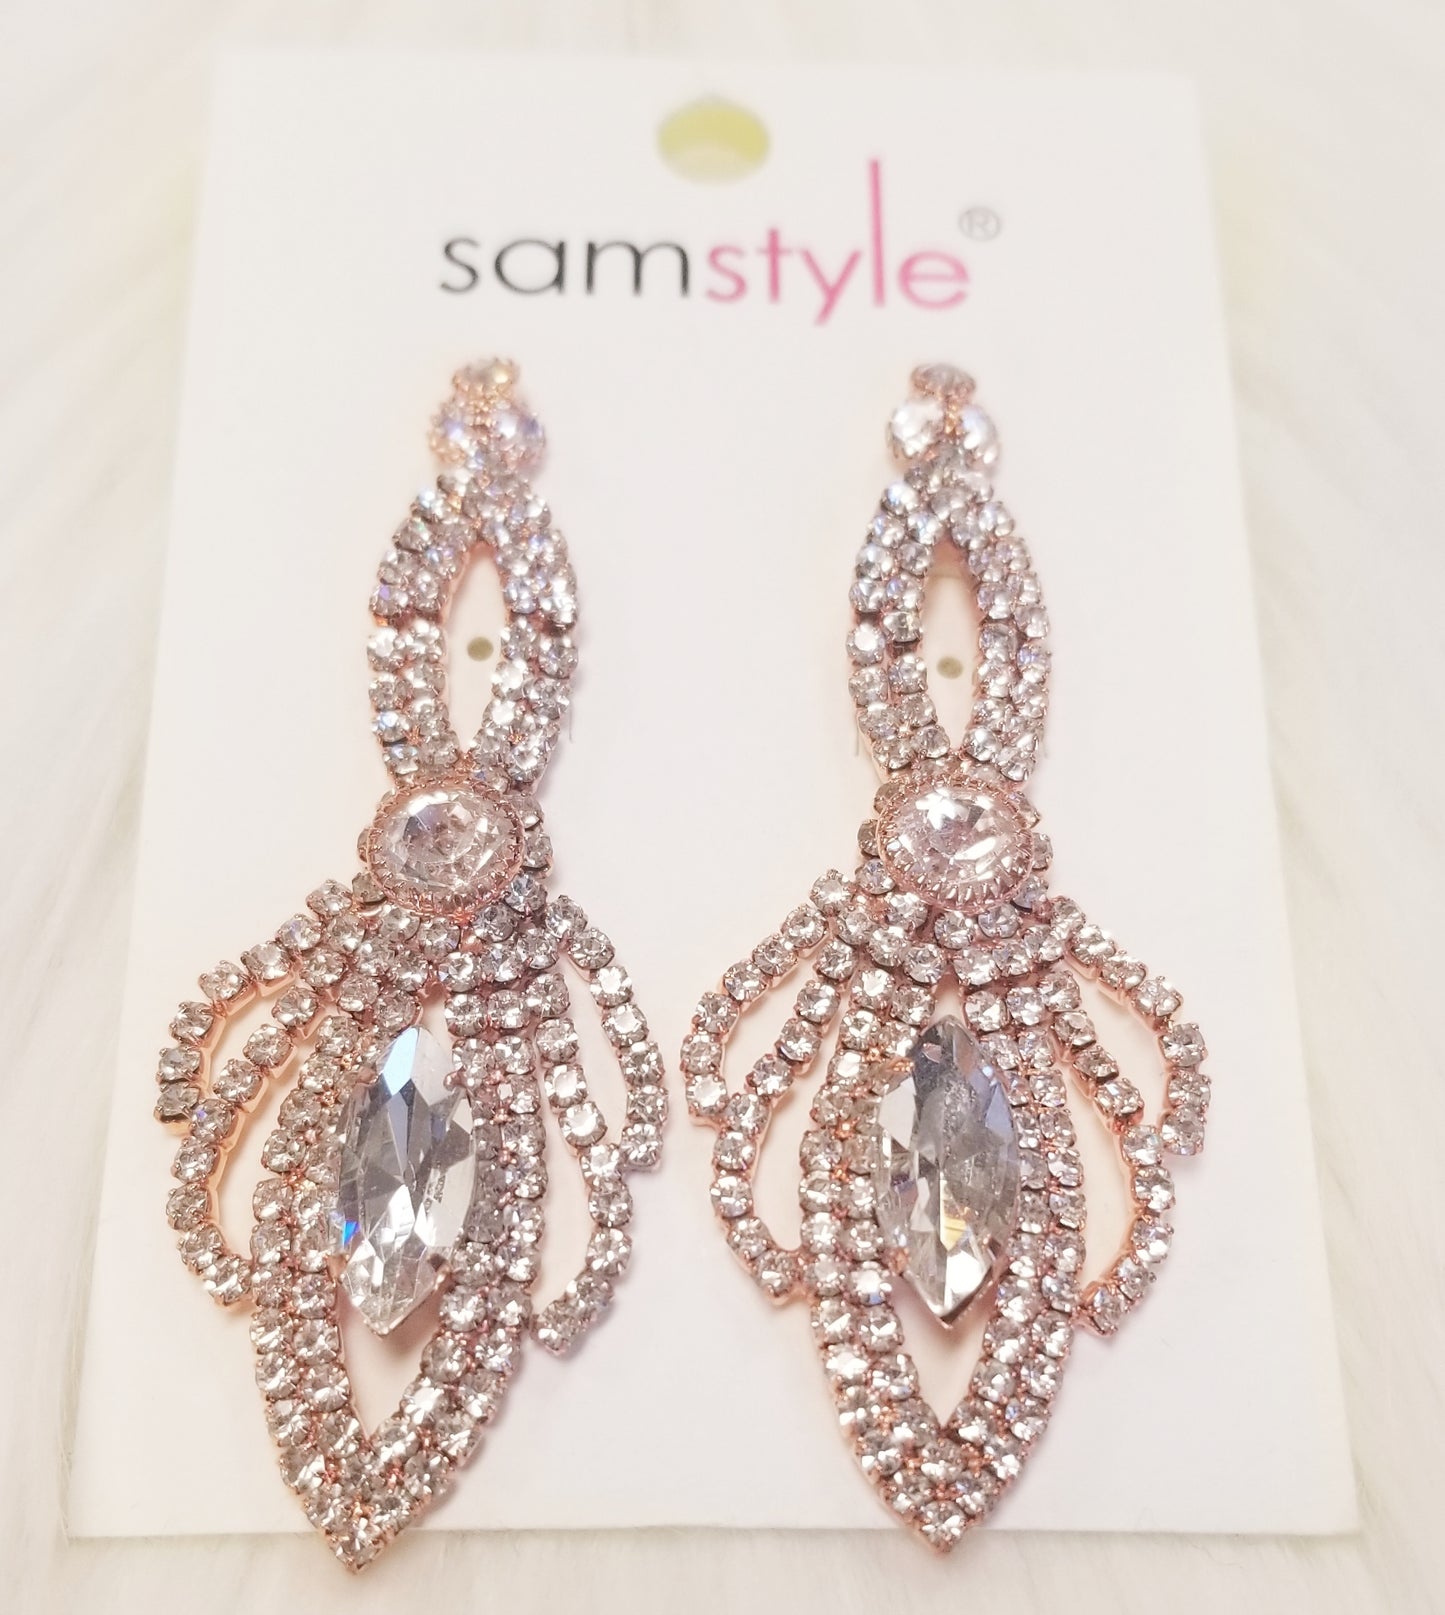 Sam Style Earrings